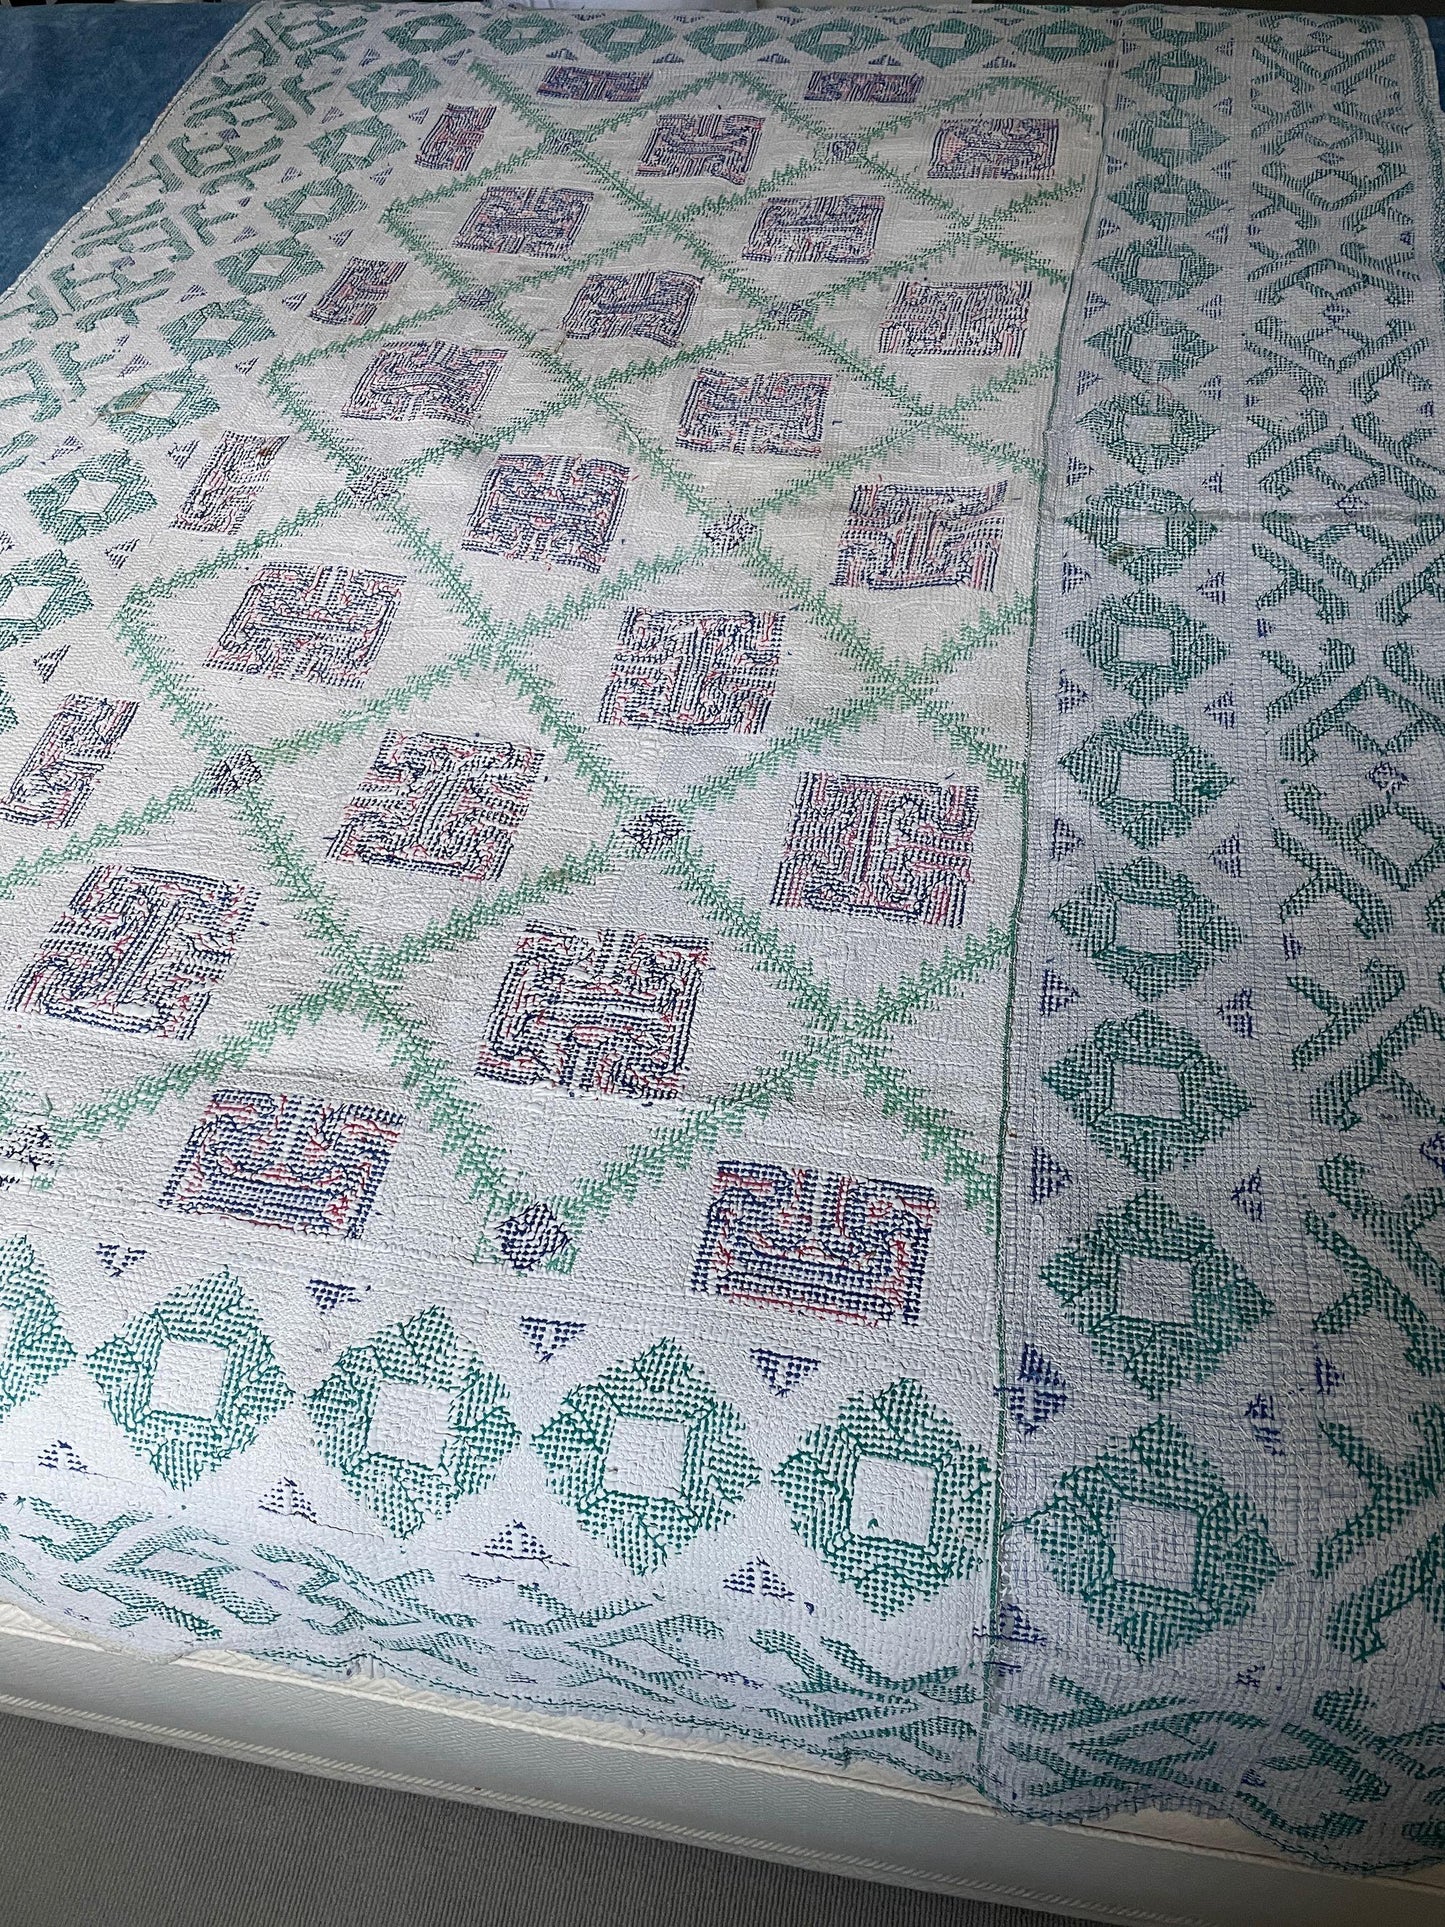 
                  
                    vintage galicha carpet kantha rug quilt wall hanging geometric cross stitch fabric panel red green
                  
                